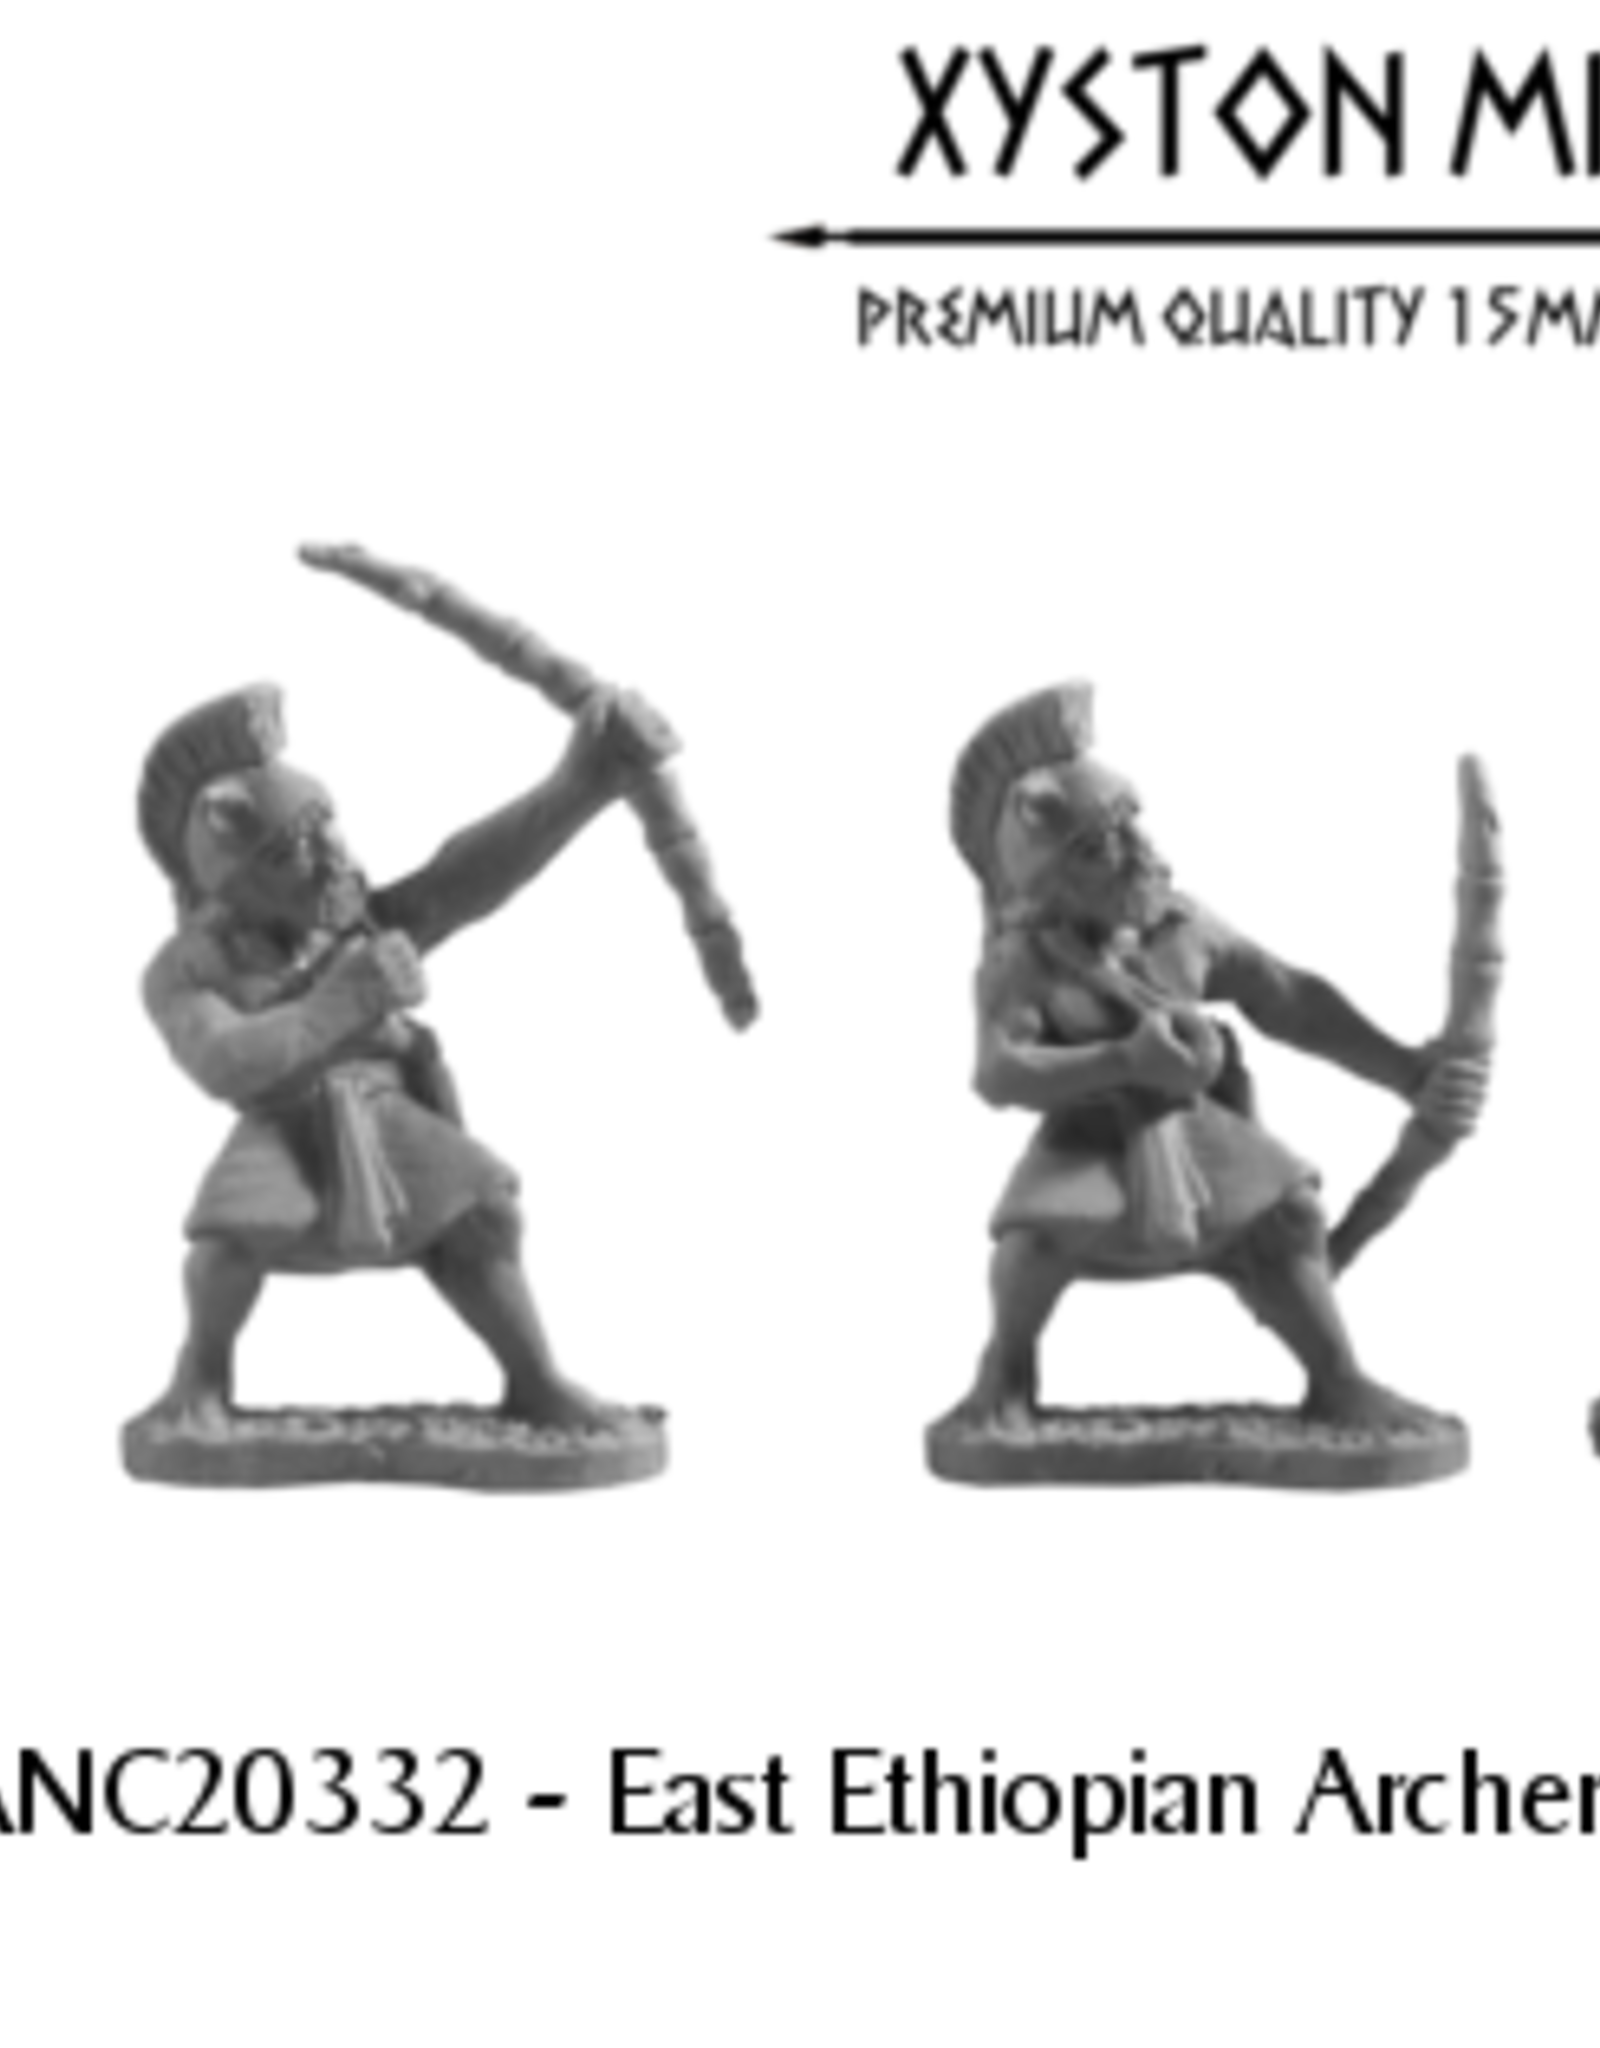 Xyston ANC20332 - East Ethiopian Archers